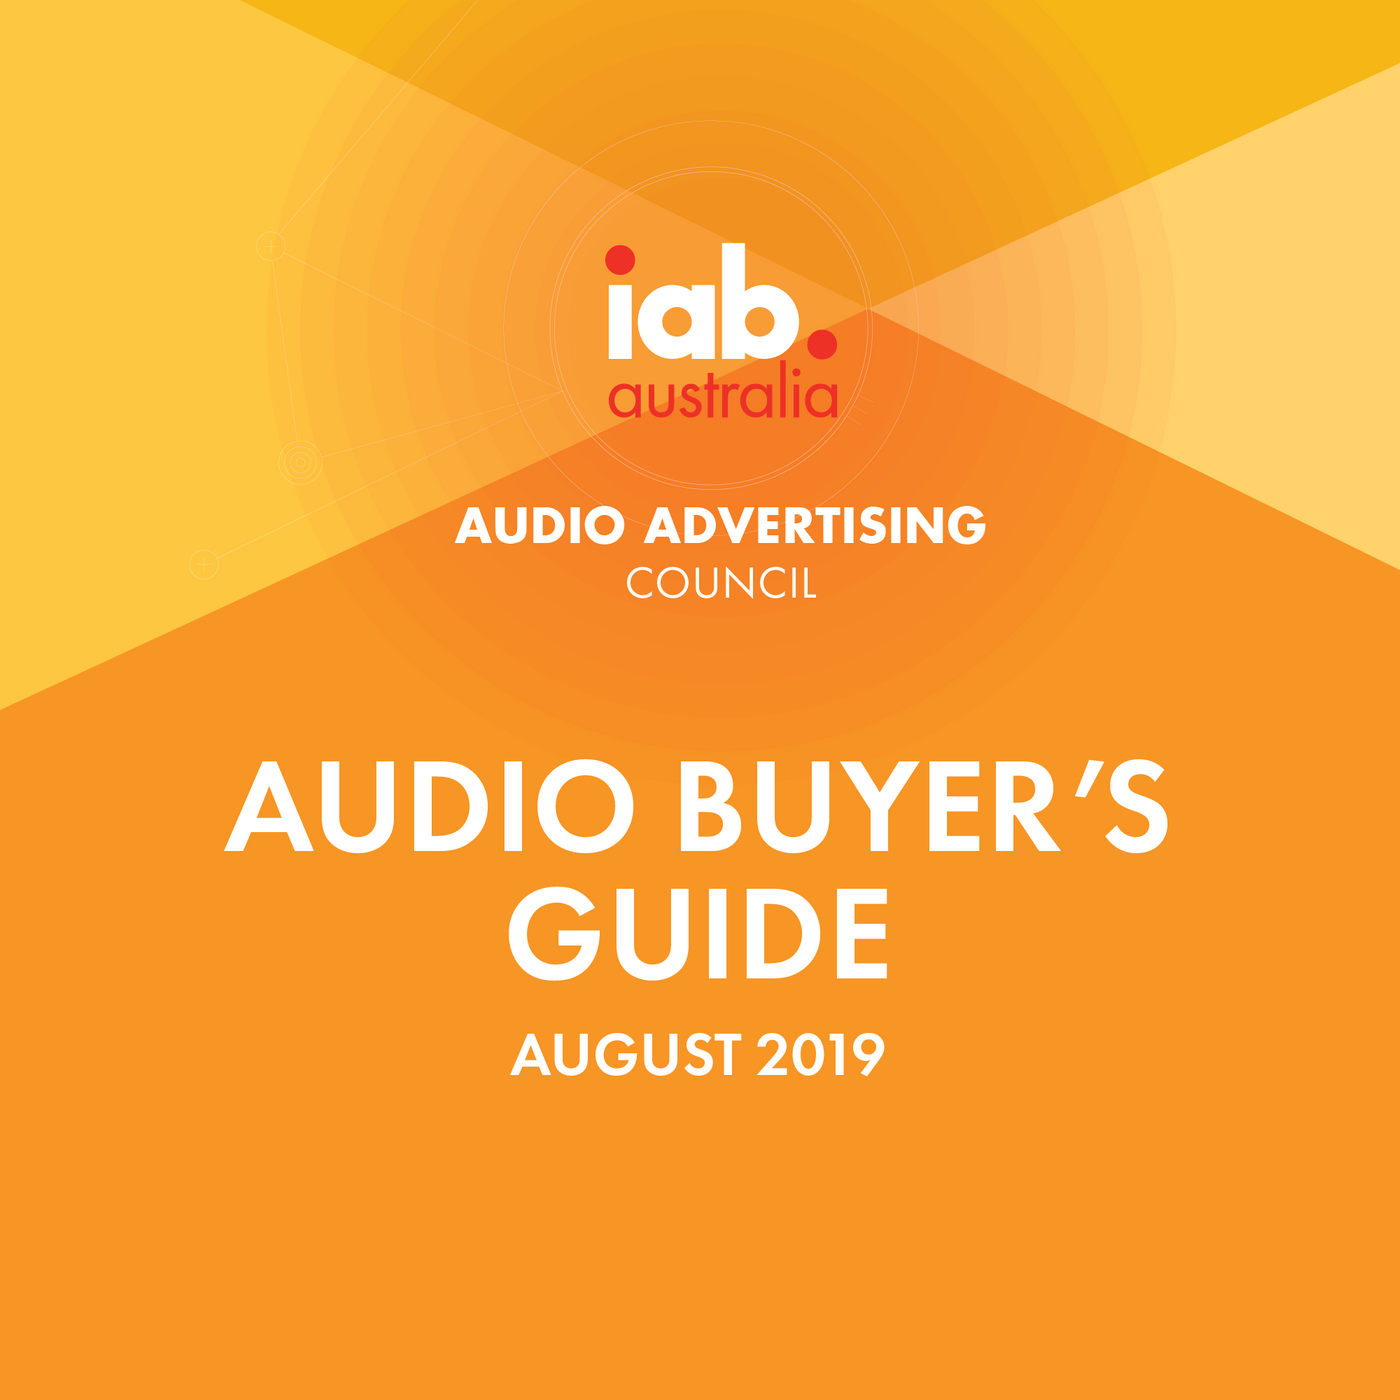 Audio Buyers Guide (IAB Australia Audio Council)